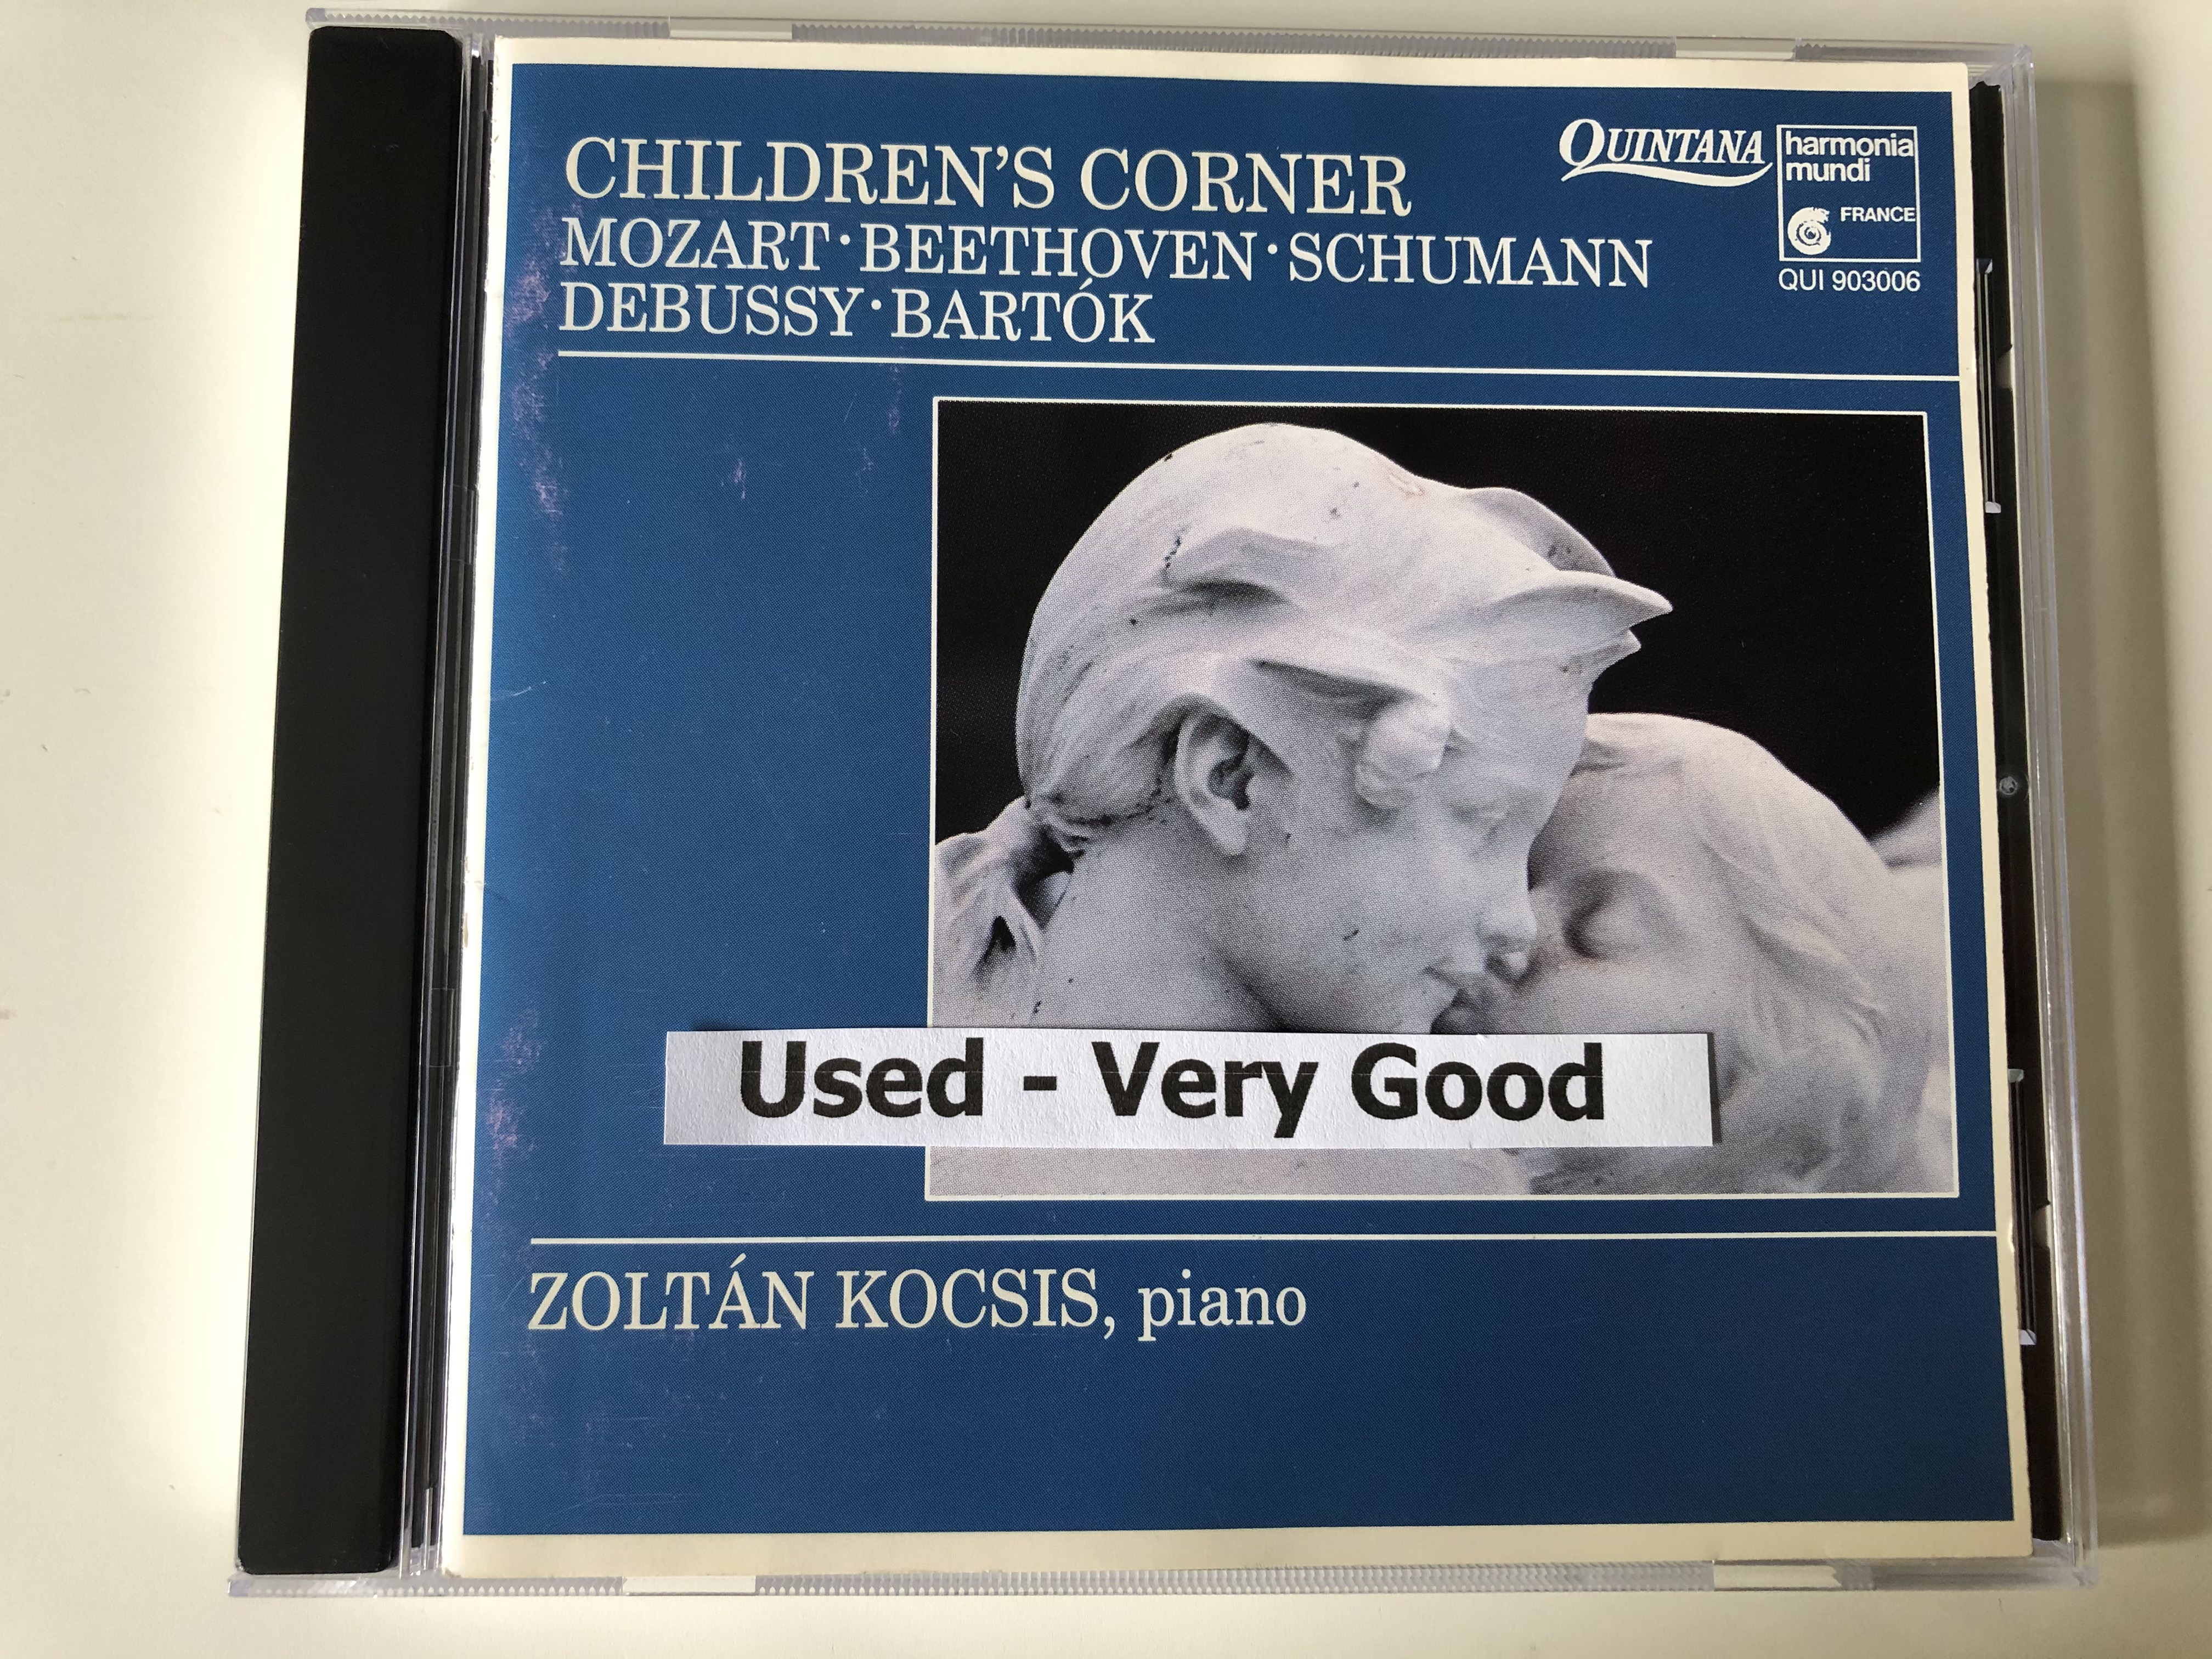 children-s-corner-mozart-beethoven-schumann-debussy-bartok-zoltan-kocsis-piano-quintana-audio-cd-1991-qui-903006-2-.jpg